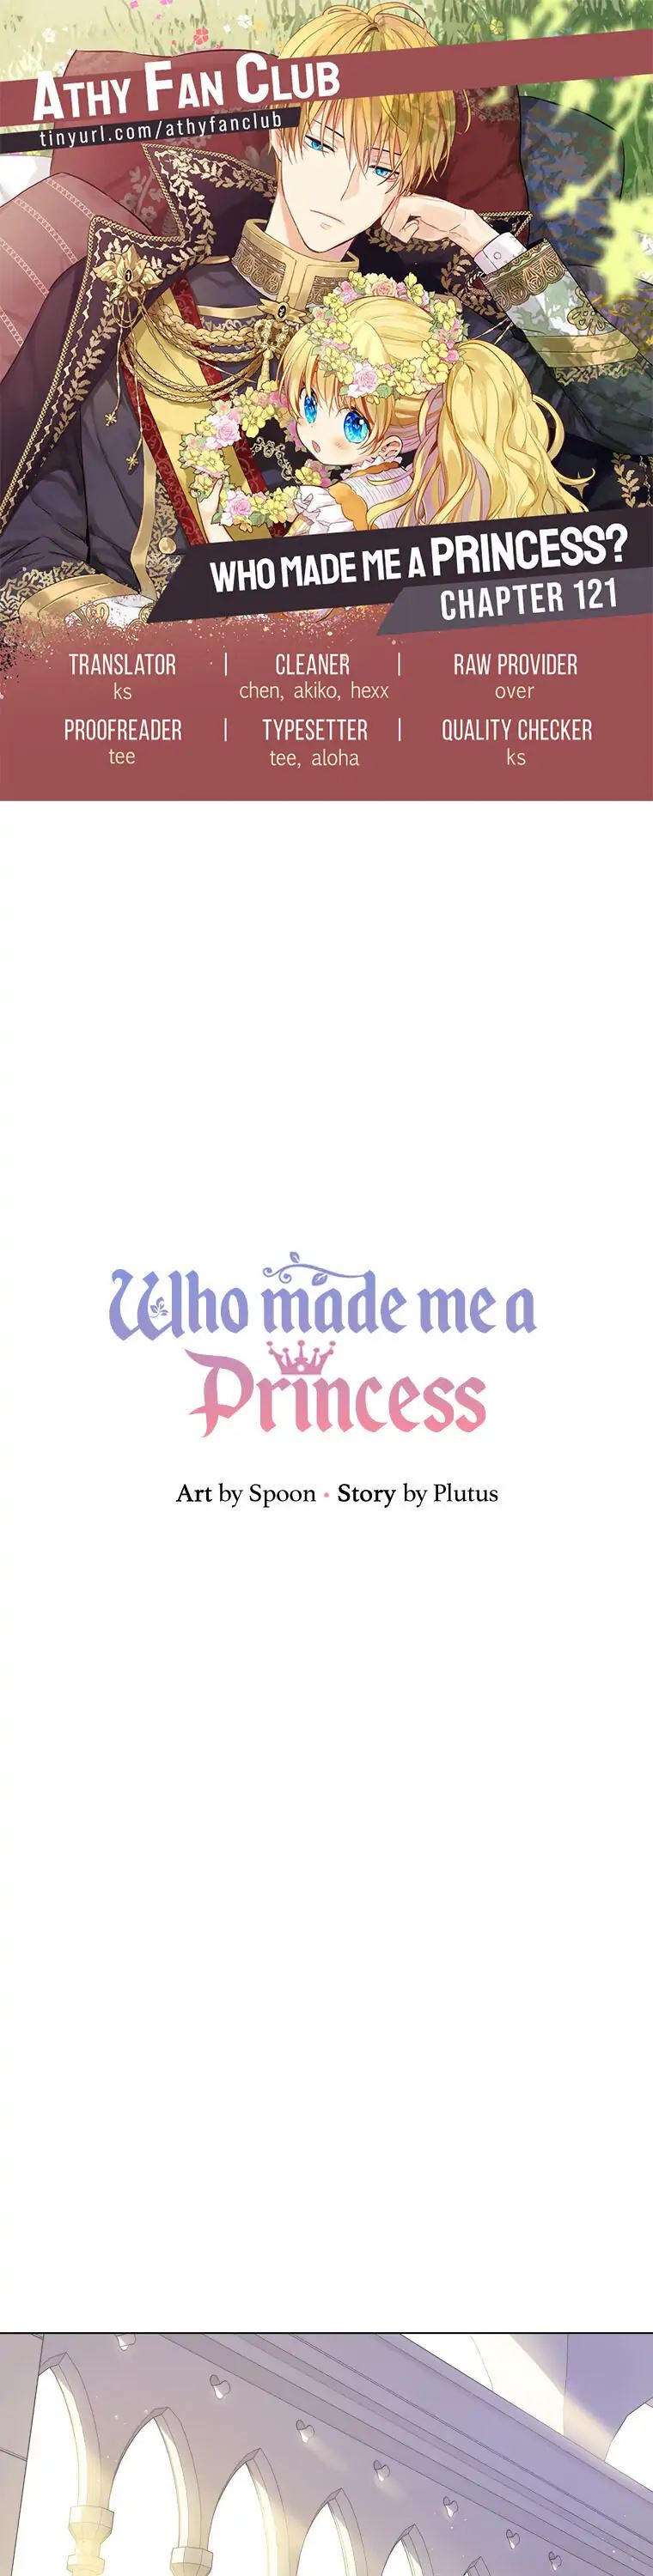 Who Made Me a Princess image